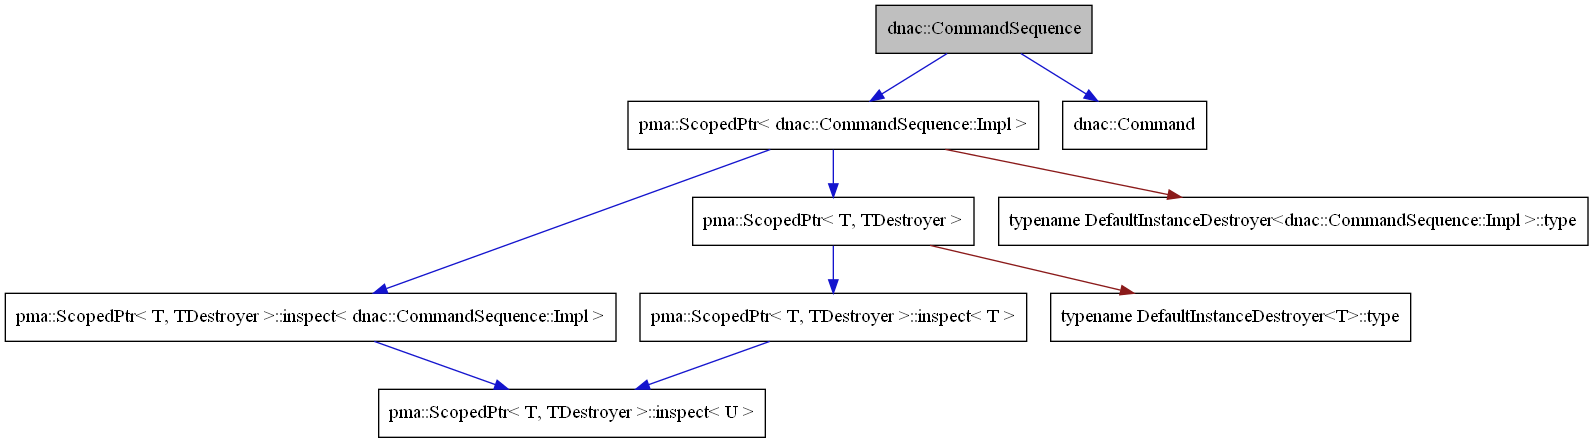 digraph {
    graph [bgcolor="#00000000"]
    node [shape=rectangle style=filled fillcolor="#FFFFFF" font=Helvetica padding=2]
    edge [color="#1414CE"]
    "3" [label="pma::ScopedPtr< dnac::CommandSequence::Impl >" tooltip="pma::ScopedPtr< dnac::CommandSequence::Impl >"]
    "2" [label="dnac::Command" tooltip="dnac::Command"]
    "1" [label="dnac::CommandSequence" tooltip="dnac::CommandSequence" fillcolor="#BFBFBF"]
    "9" [label="pma::ScopedPtr< T, TDestroyer >::inspect< T >" tooltip="pma::ScopedPtr< T, TDestroyer >::inspect< T >"]
    "5" [label="pma::ScopedPtr< T, TDestroyer >::inspect< dnac::CommandSequence::Impl >" tooltip="pma::ScopedPtr< T, TDestroyer >::inspect< dnac::CommandSequence::Impl >"]
    "7" [label="pma::ScopedPtr< T, TDestroyer >" tooltip="pma::ScopedPtr< T, TDestroyer >"]
    "6" [label="pma::ScopedPtr< T, TDestroyer >::inspect< U >" tooltip="pma::ScopedPtr< T, TDestroyer >::inspect< U >"]
    "8" [label="typename DefaultInstanceDestroyer<T>::type" tooltip="typename DefaultInstanceDestroyer<T>::type"]
    "4" [label="typename DefaultInstanceDestroyer<dnac::CommandSequence::Impl >::type" tooltip="typename DefaultInstanceDestroyer<dnac::CommandSequence::Impl >::type"]
    "3" -> "4" [dir=forward tooltip="private-inheritance" color="#8B1A1A"]
    "3" -> "5" [dir=forward tooltip="usage"]
    "3" -> "7" [dir=forward tooltip="template-instance"]
    "1" -> "2" [dir=forward tooltip="public-inheritance"]
    "1" -> "3" [dir=forward tooltip="usage"]
    "9" -> "6" [dir=forward tooltip="template-instance"]
    "5" -> "6" [dir=forward tooltip="template-instance"]
    "7" -> "8" [dir=forward tooltip="private-inheritance" color="#8B1A1A"]
    "7" -> "9" [dir=forward tooltip="usage"]
}